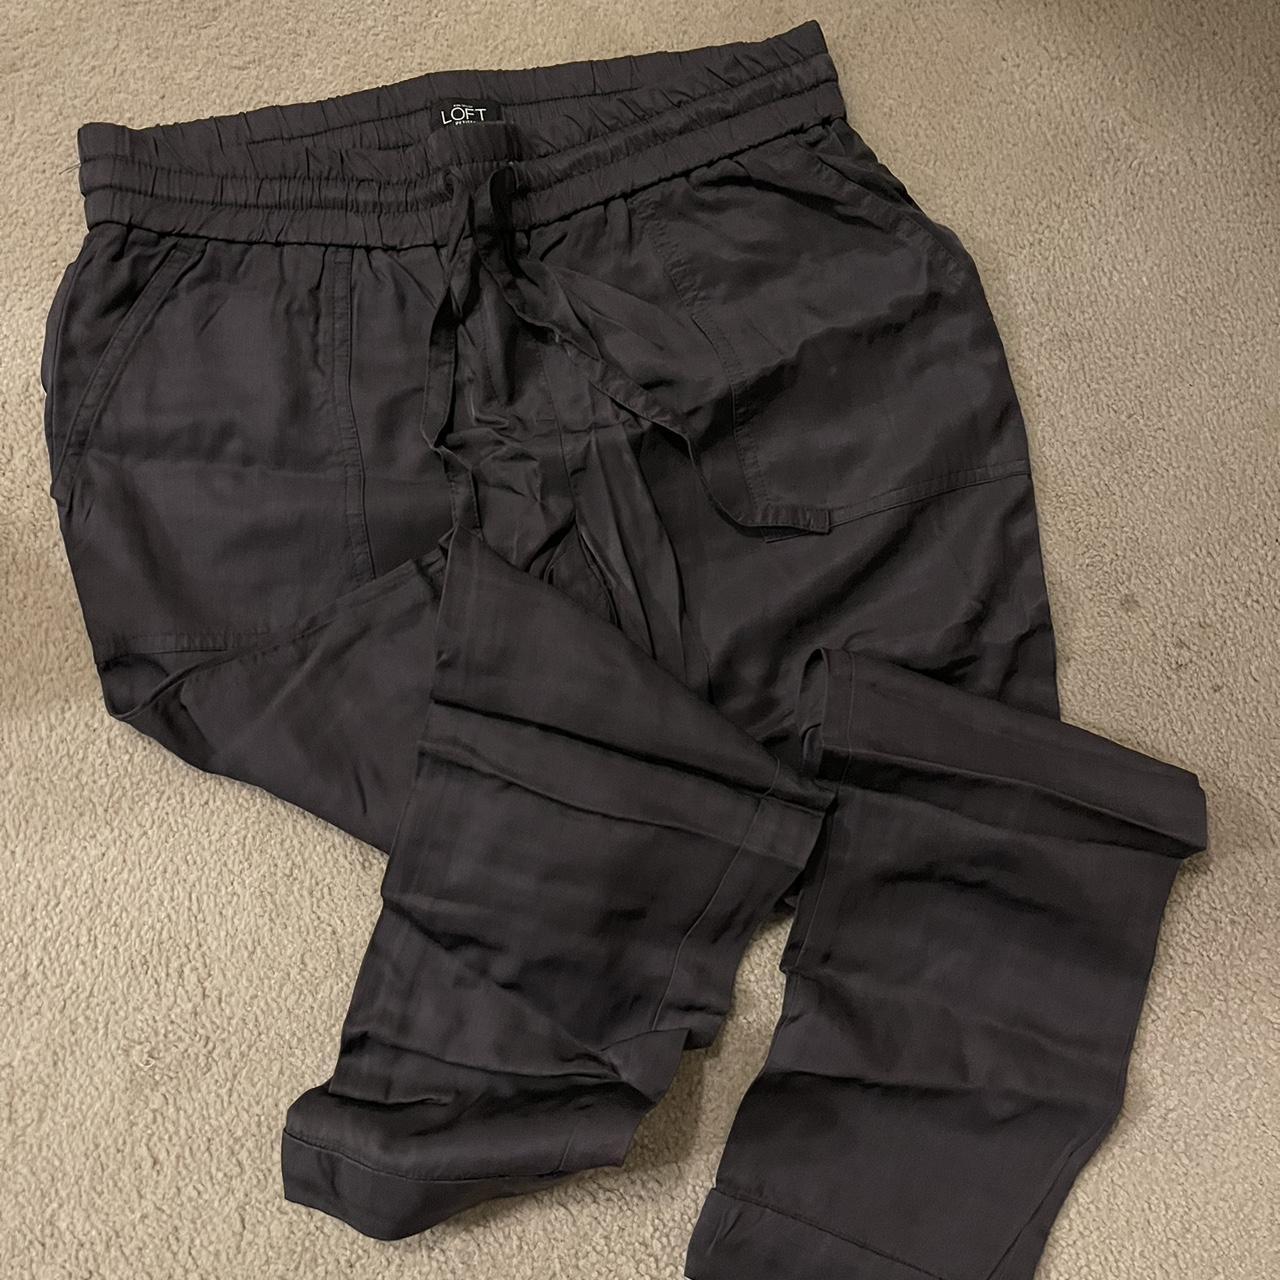 Dark grey/black leggings Loft brand dark grey/black - Depop